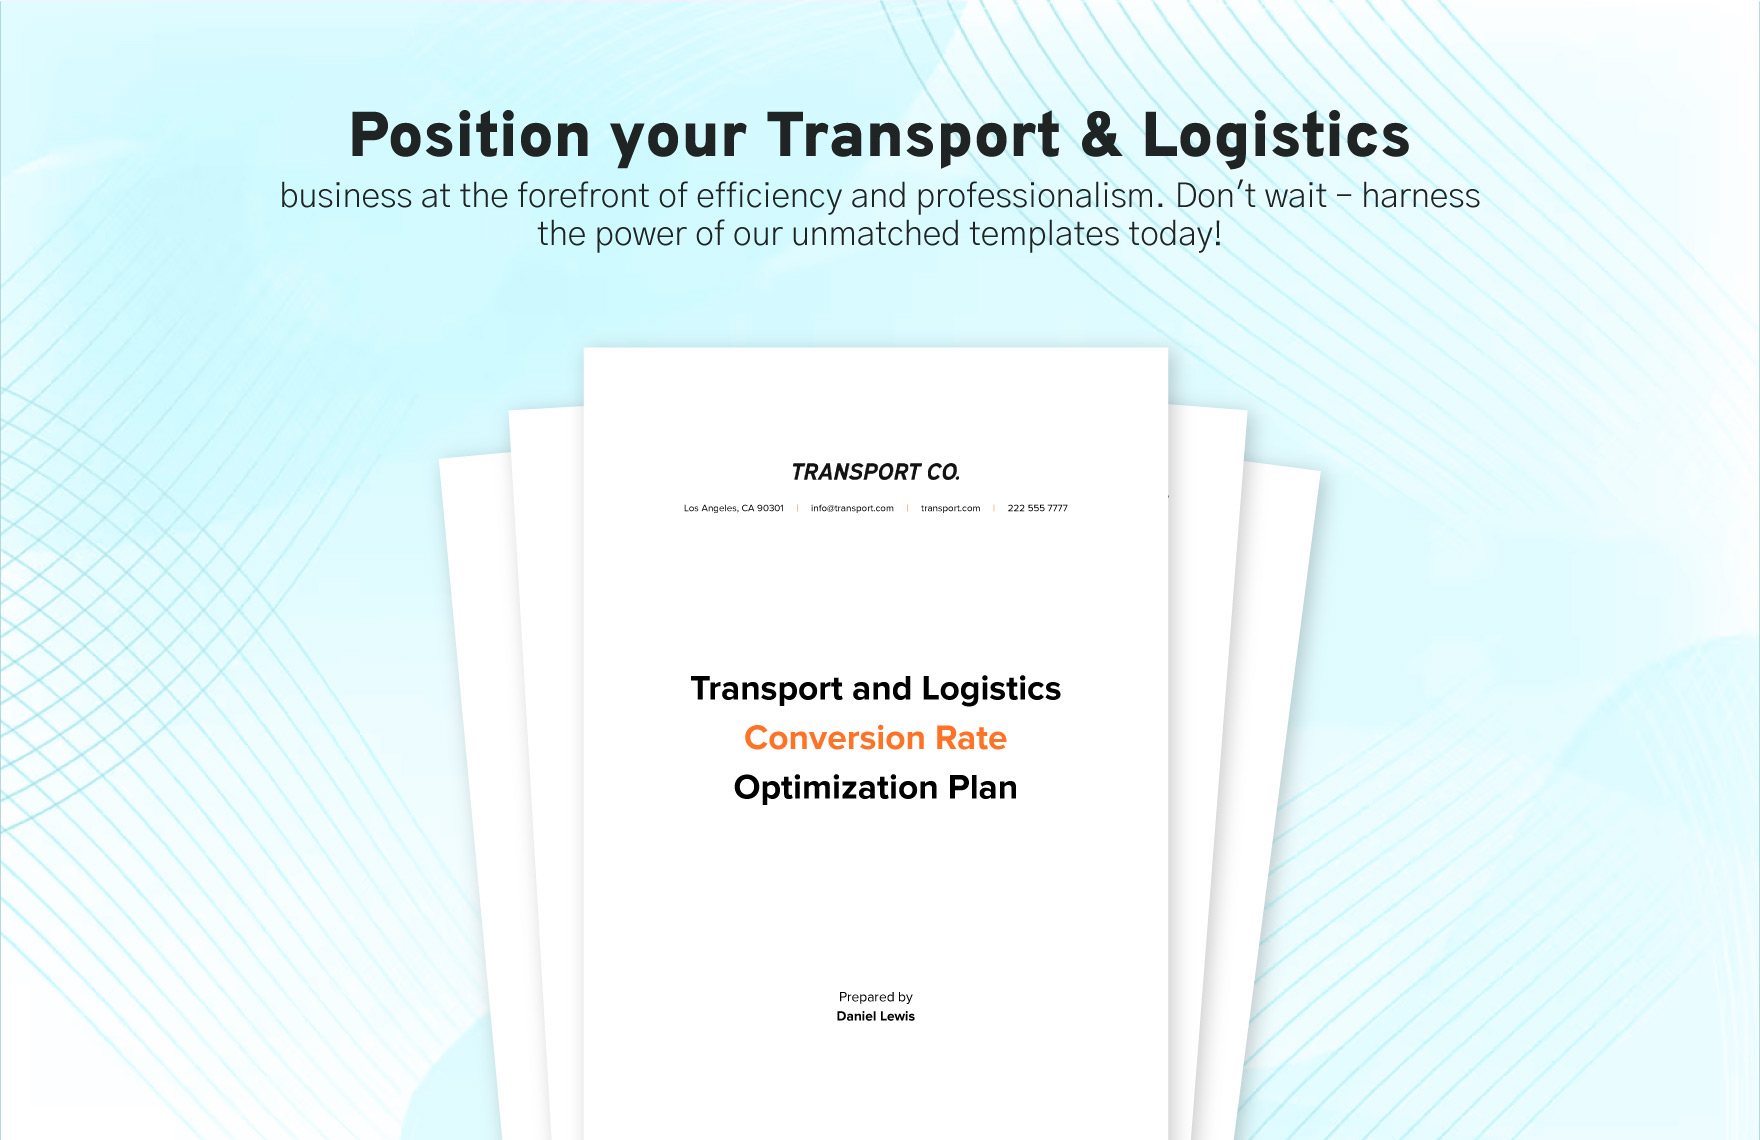 Transport and Logistics Conversion Rate Optimization Plan Template